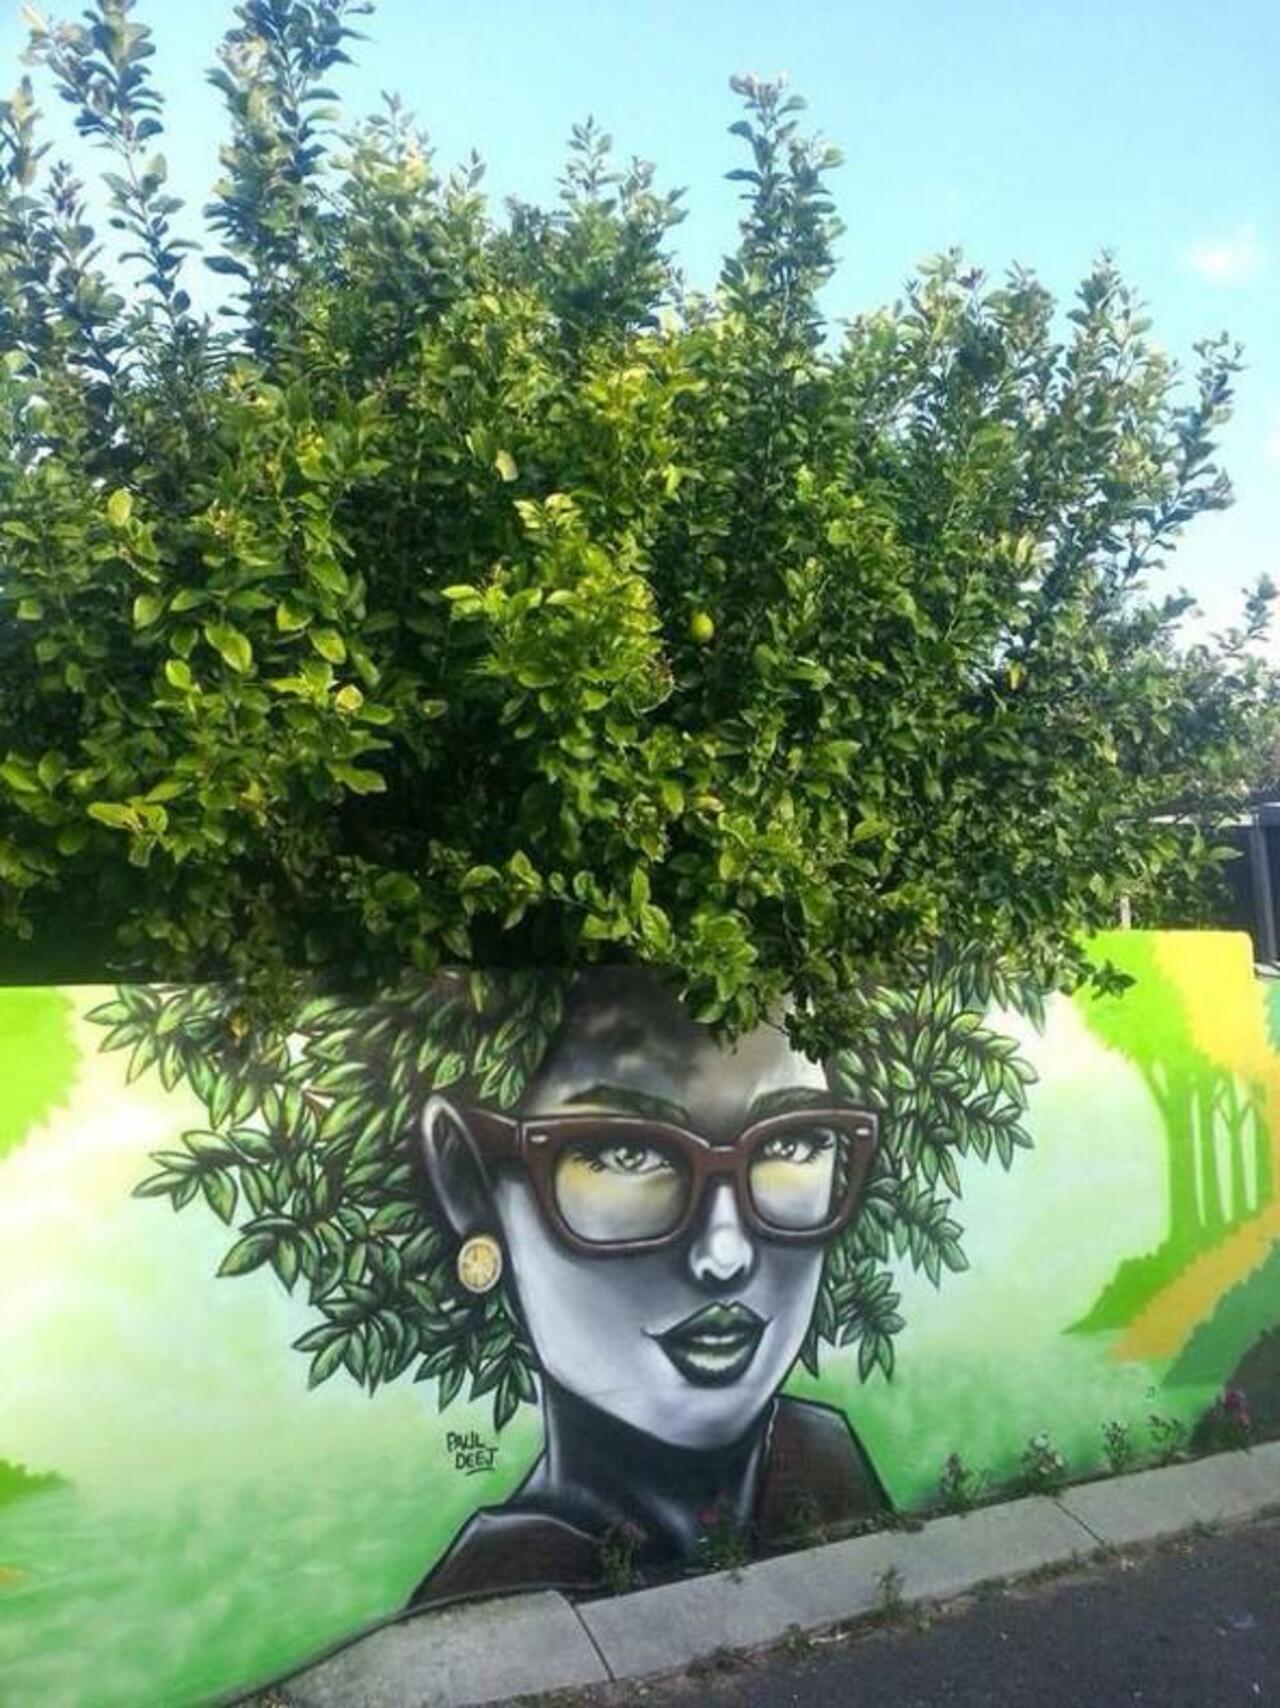 When Street Art meets Nature - Perth, Australia https://t.co/UI9H36pRCn #streetart #mural #graffiti #art